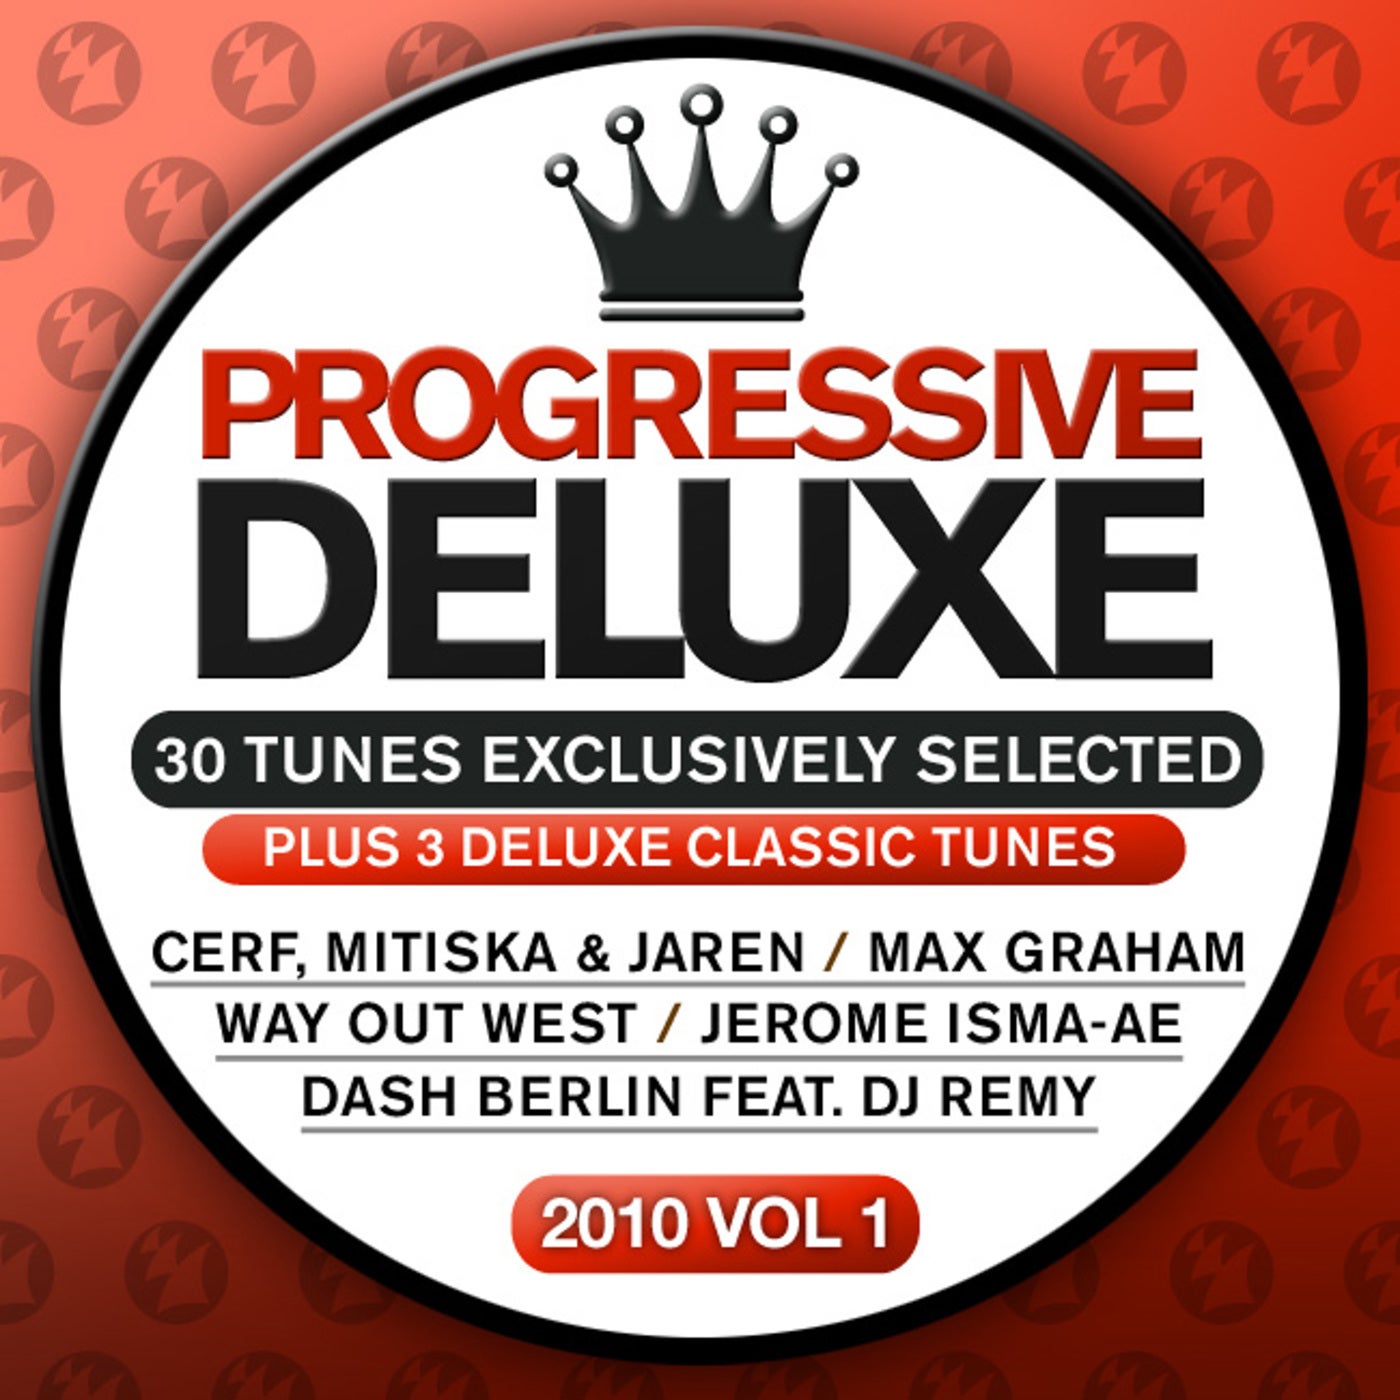 Progressive Deluxe 2010, Vol. 1 - 30 Tunes Exclusively Selected